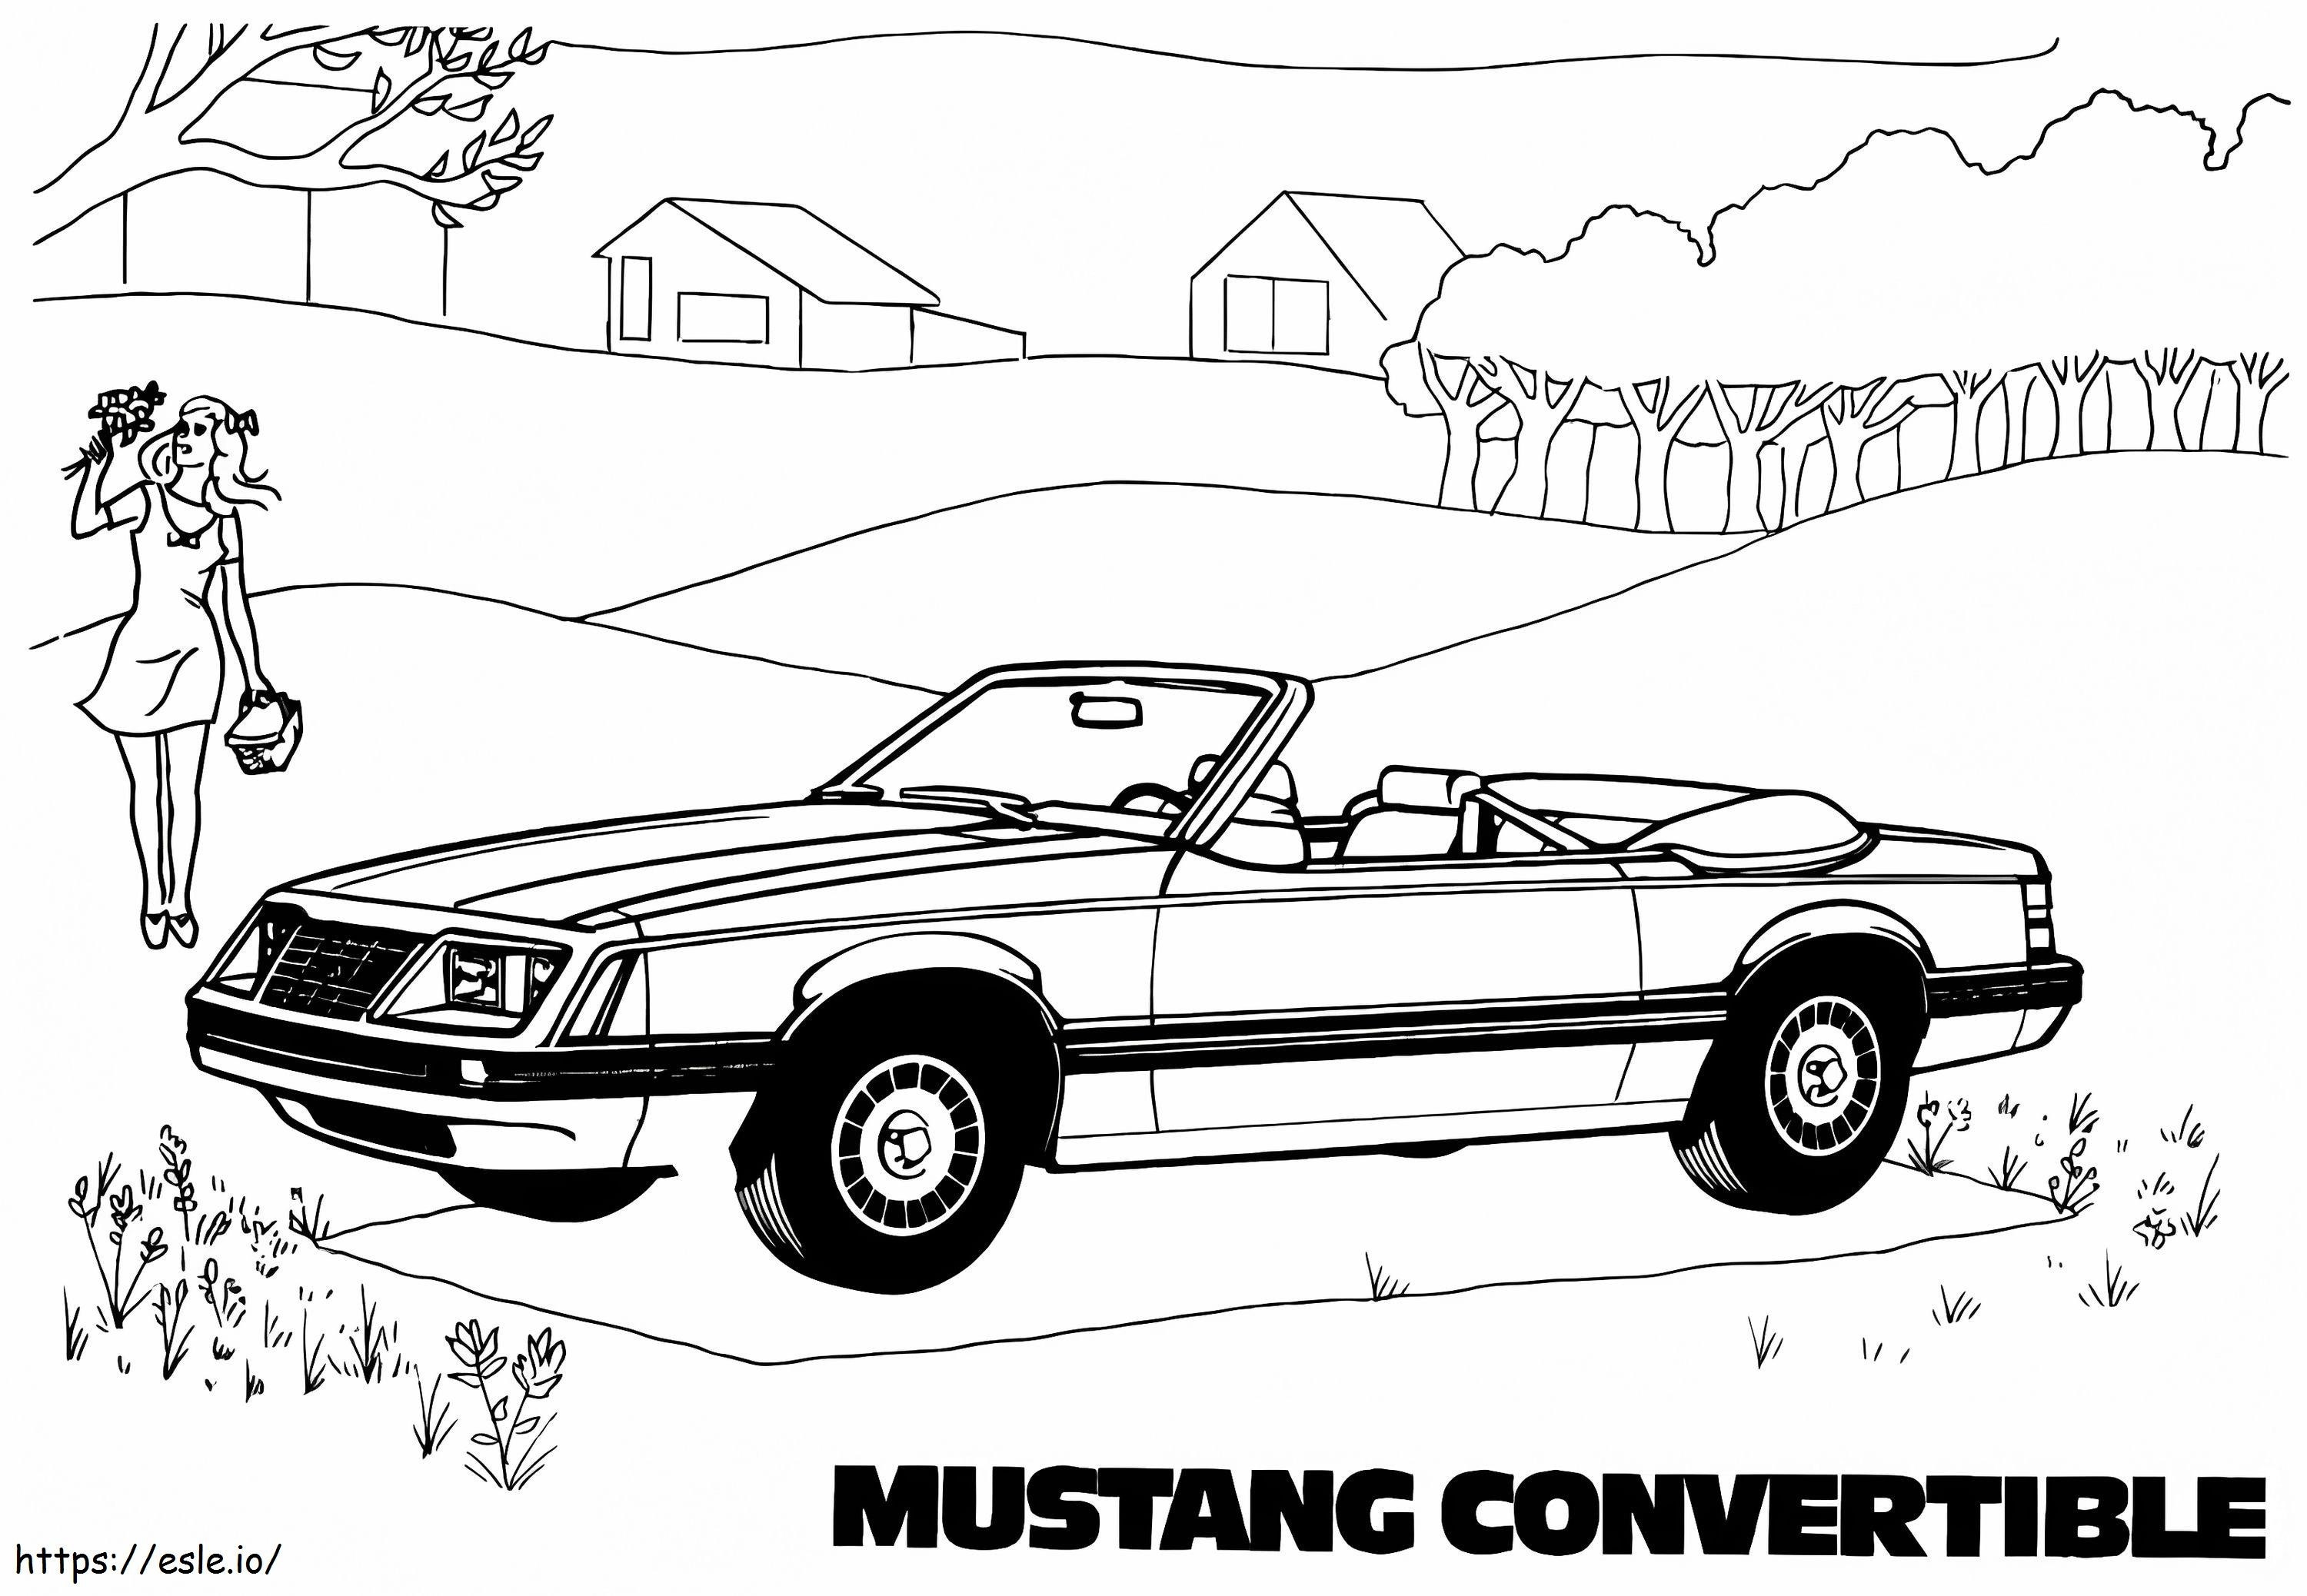 Mustang Convertible coloring page